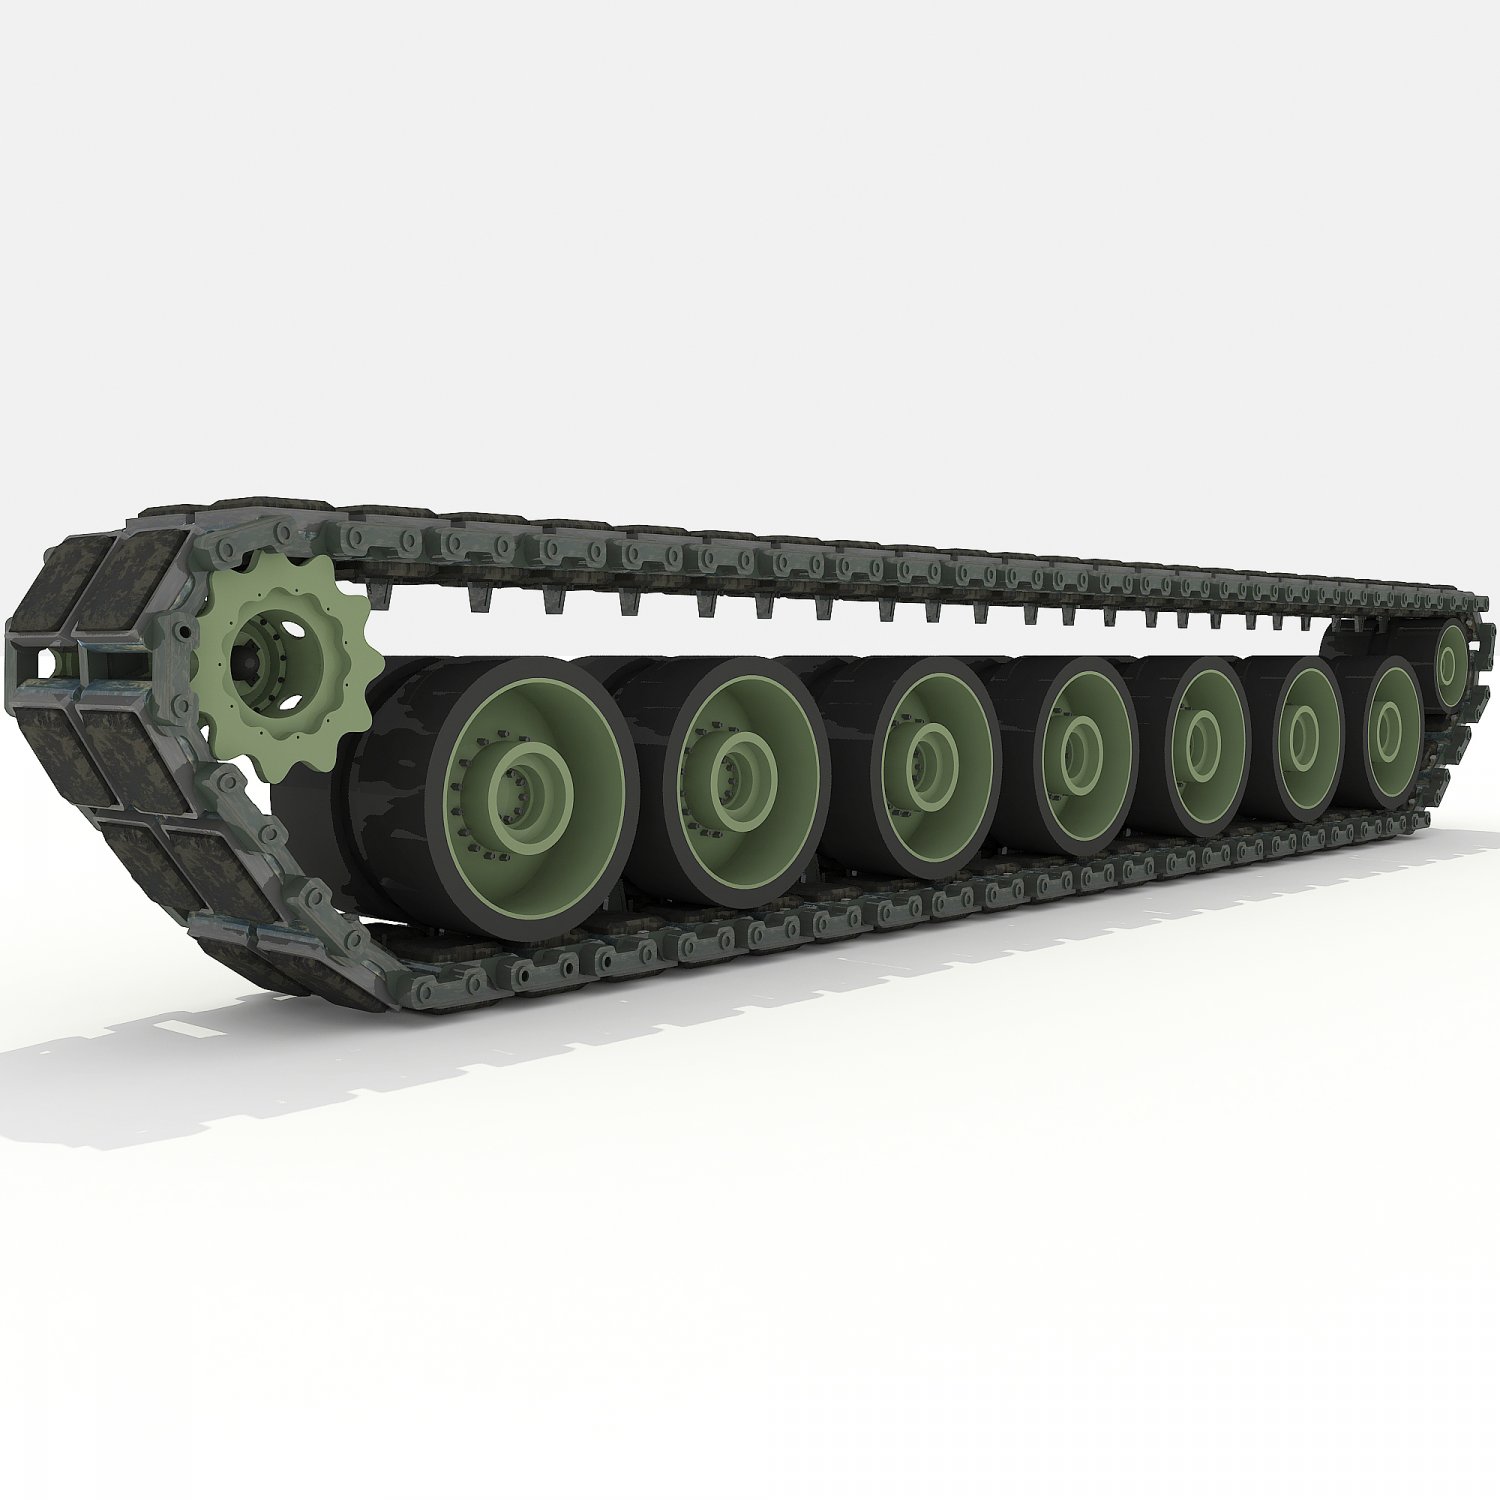 military_tank_tracks_and_wheels_3d_model_c4d_max_obj_fbx_ma_lwo_3ds_3dm_stl_1291988_o.jpg